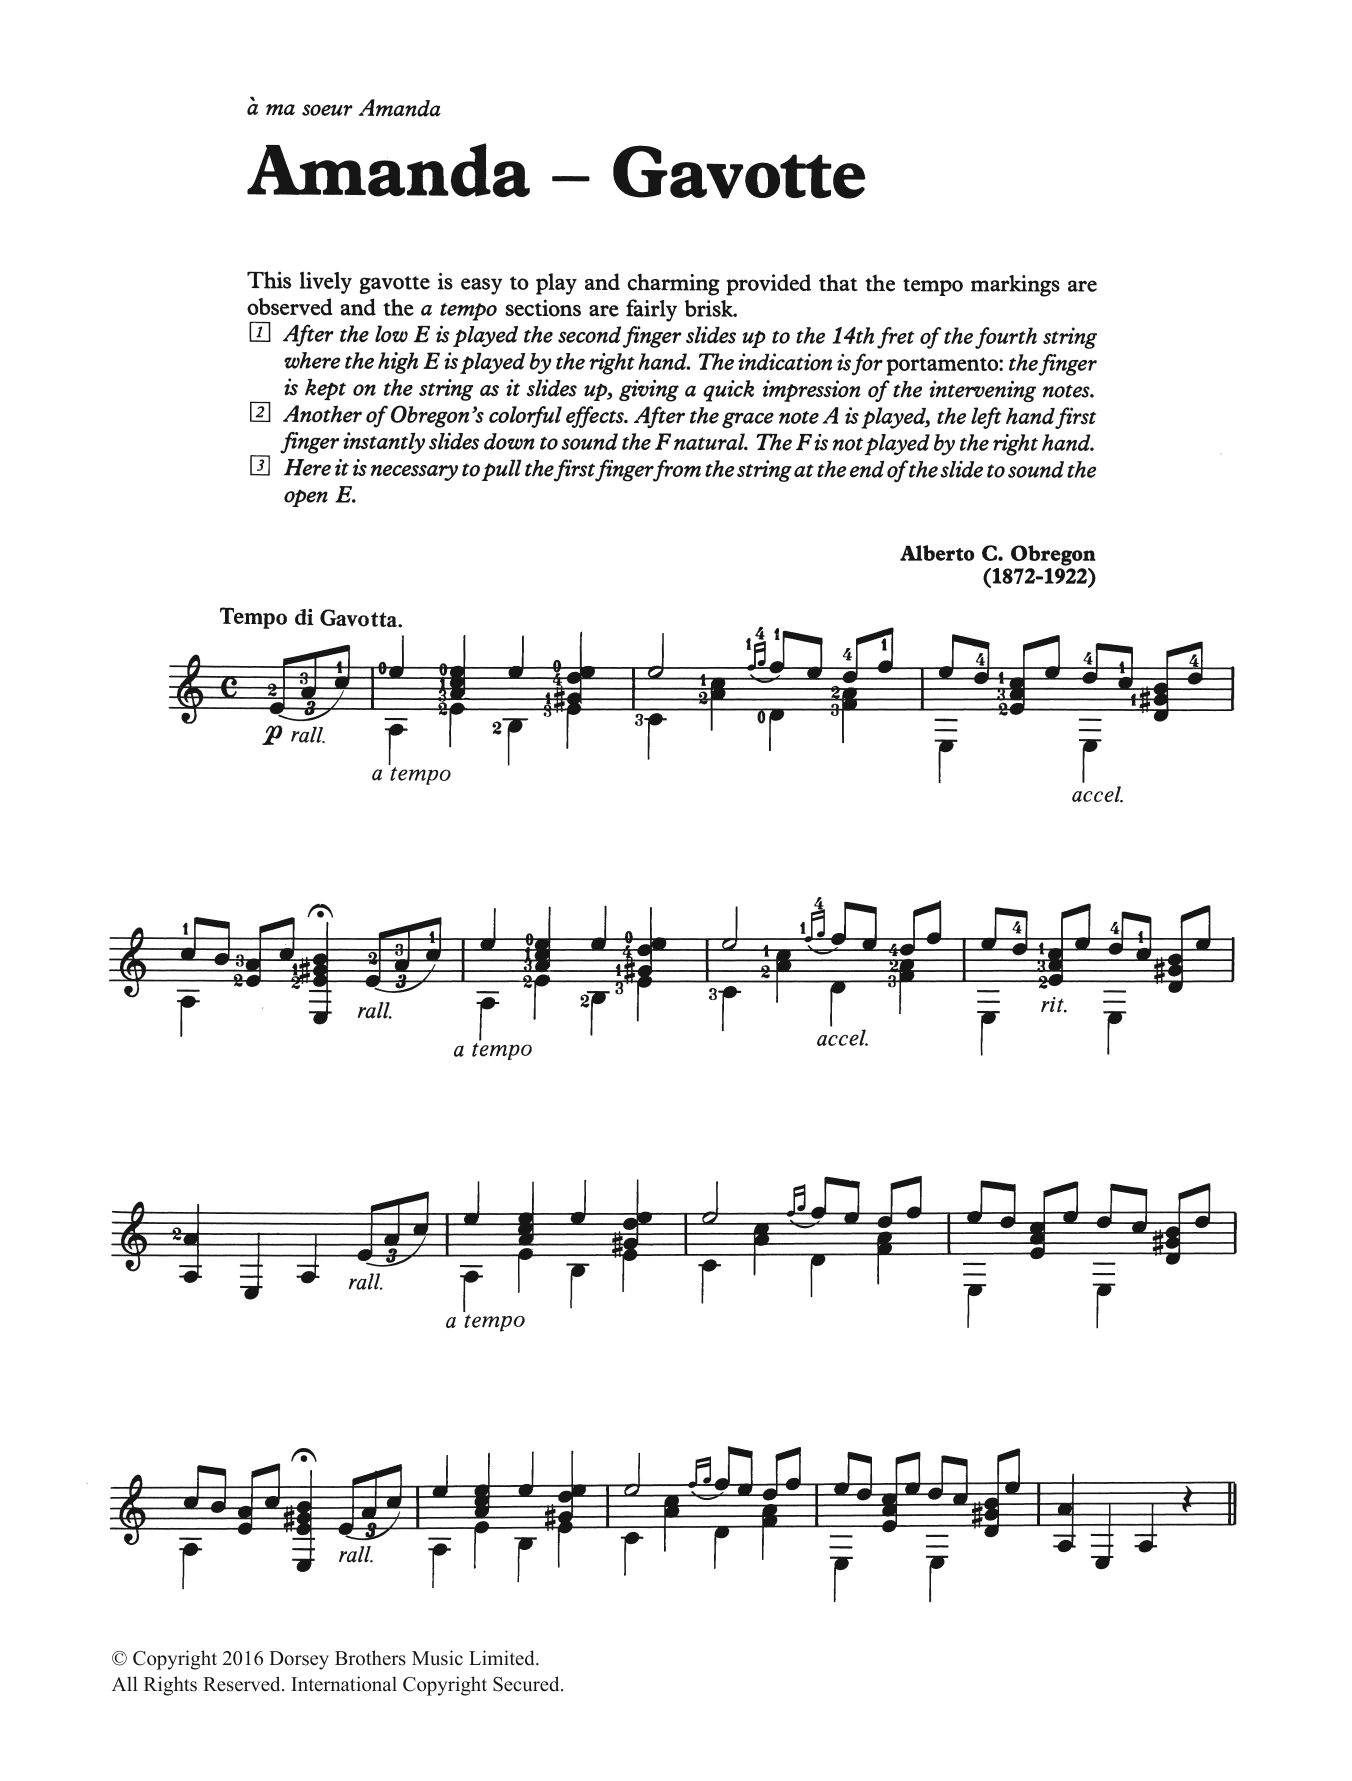 Alberto C. Obregon Amanda - Gavotte Sheet Music Notes & Chords for Guitar - Download or Print PDF